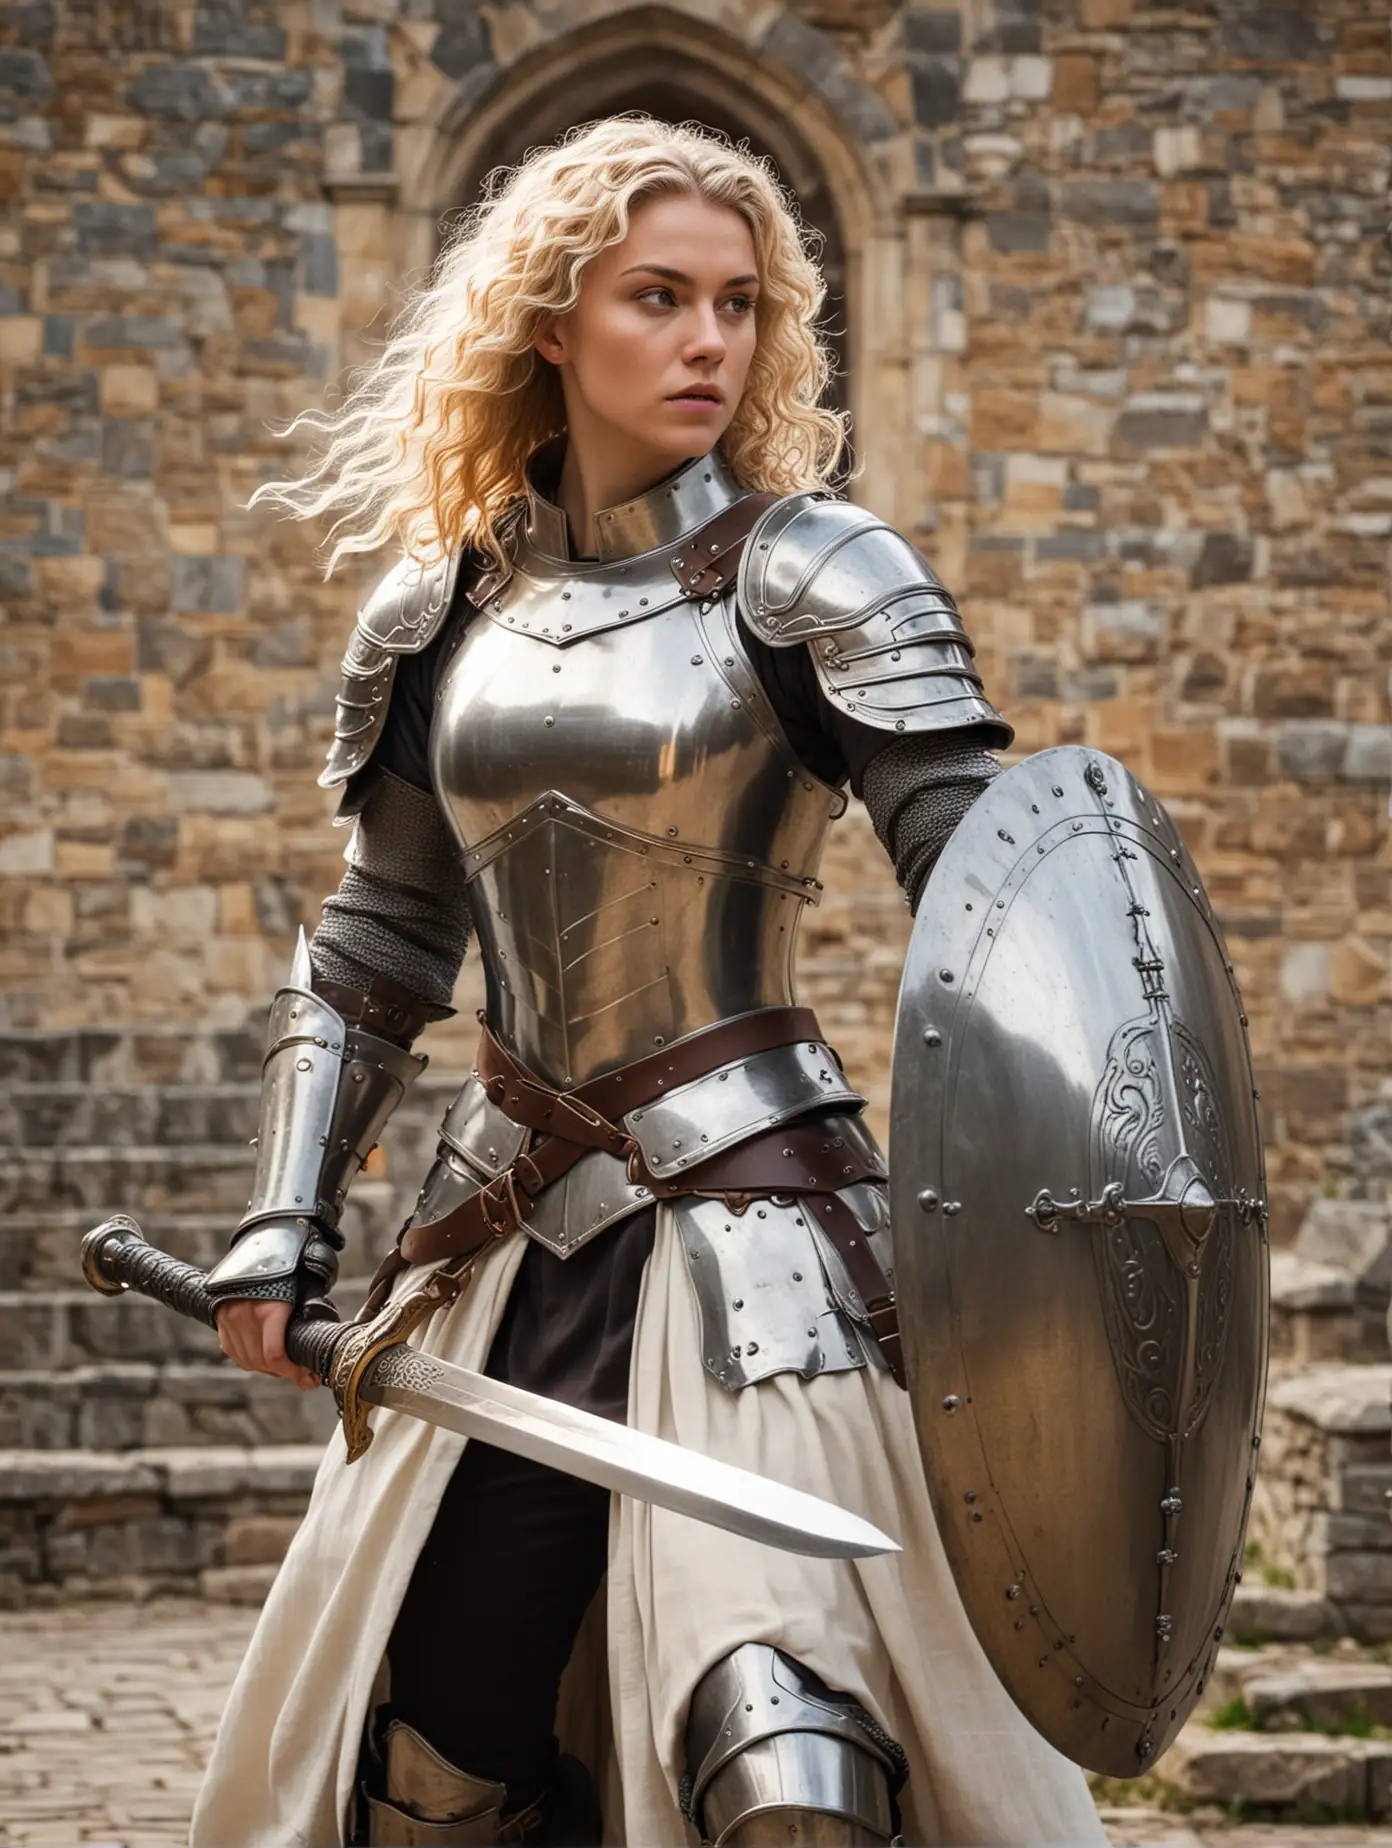 Blonde Female Paladin Warrior in Intense Battle Stance at Castle